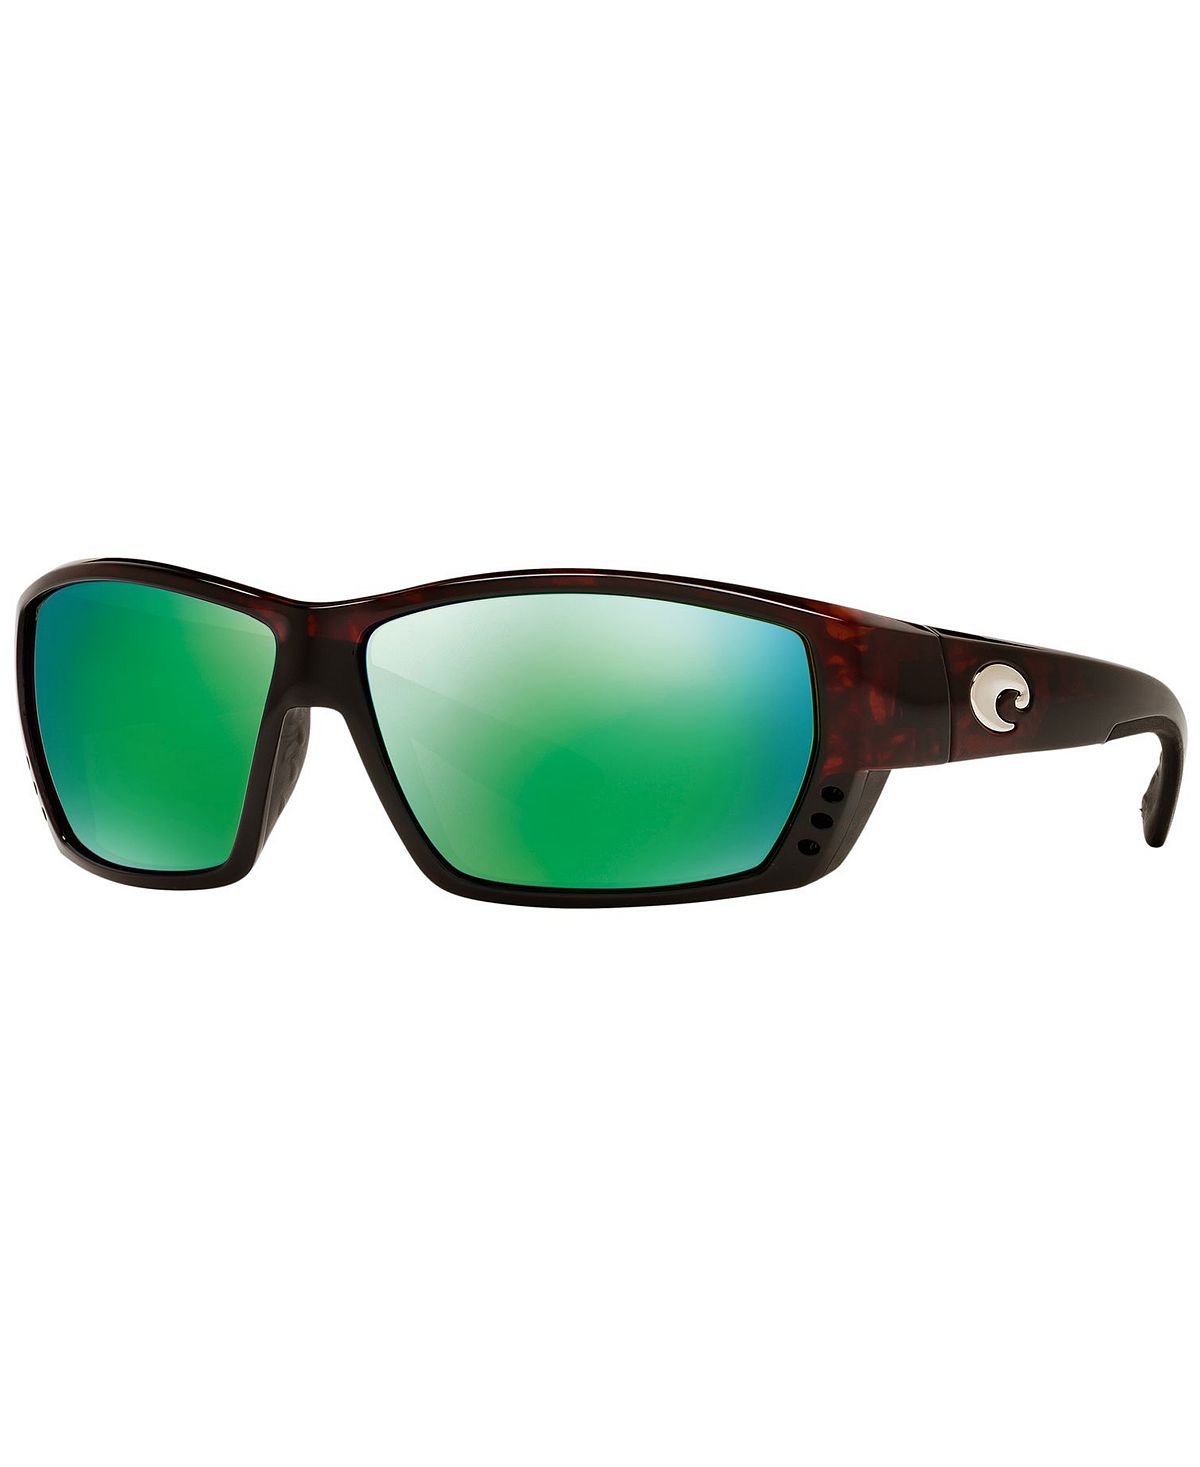 Поляризованные солнцезащитные очки, TUNA ALLEY Costa Del Mar mak aria 9 5x20 5x150 d110 2 et53 gun met mirror face